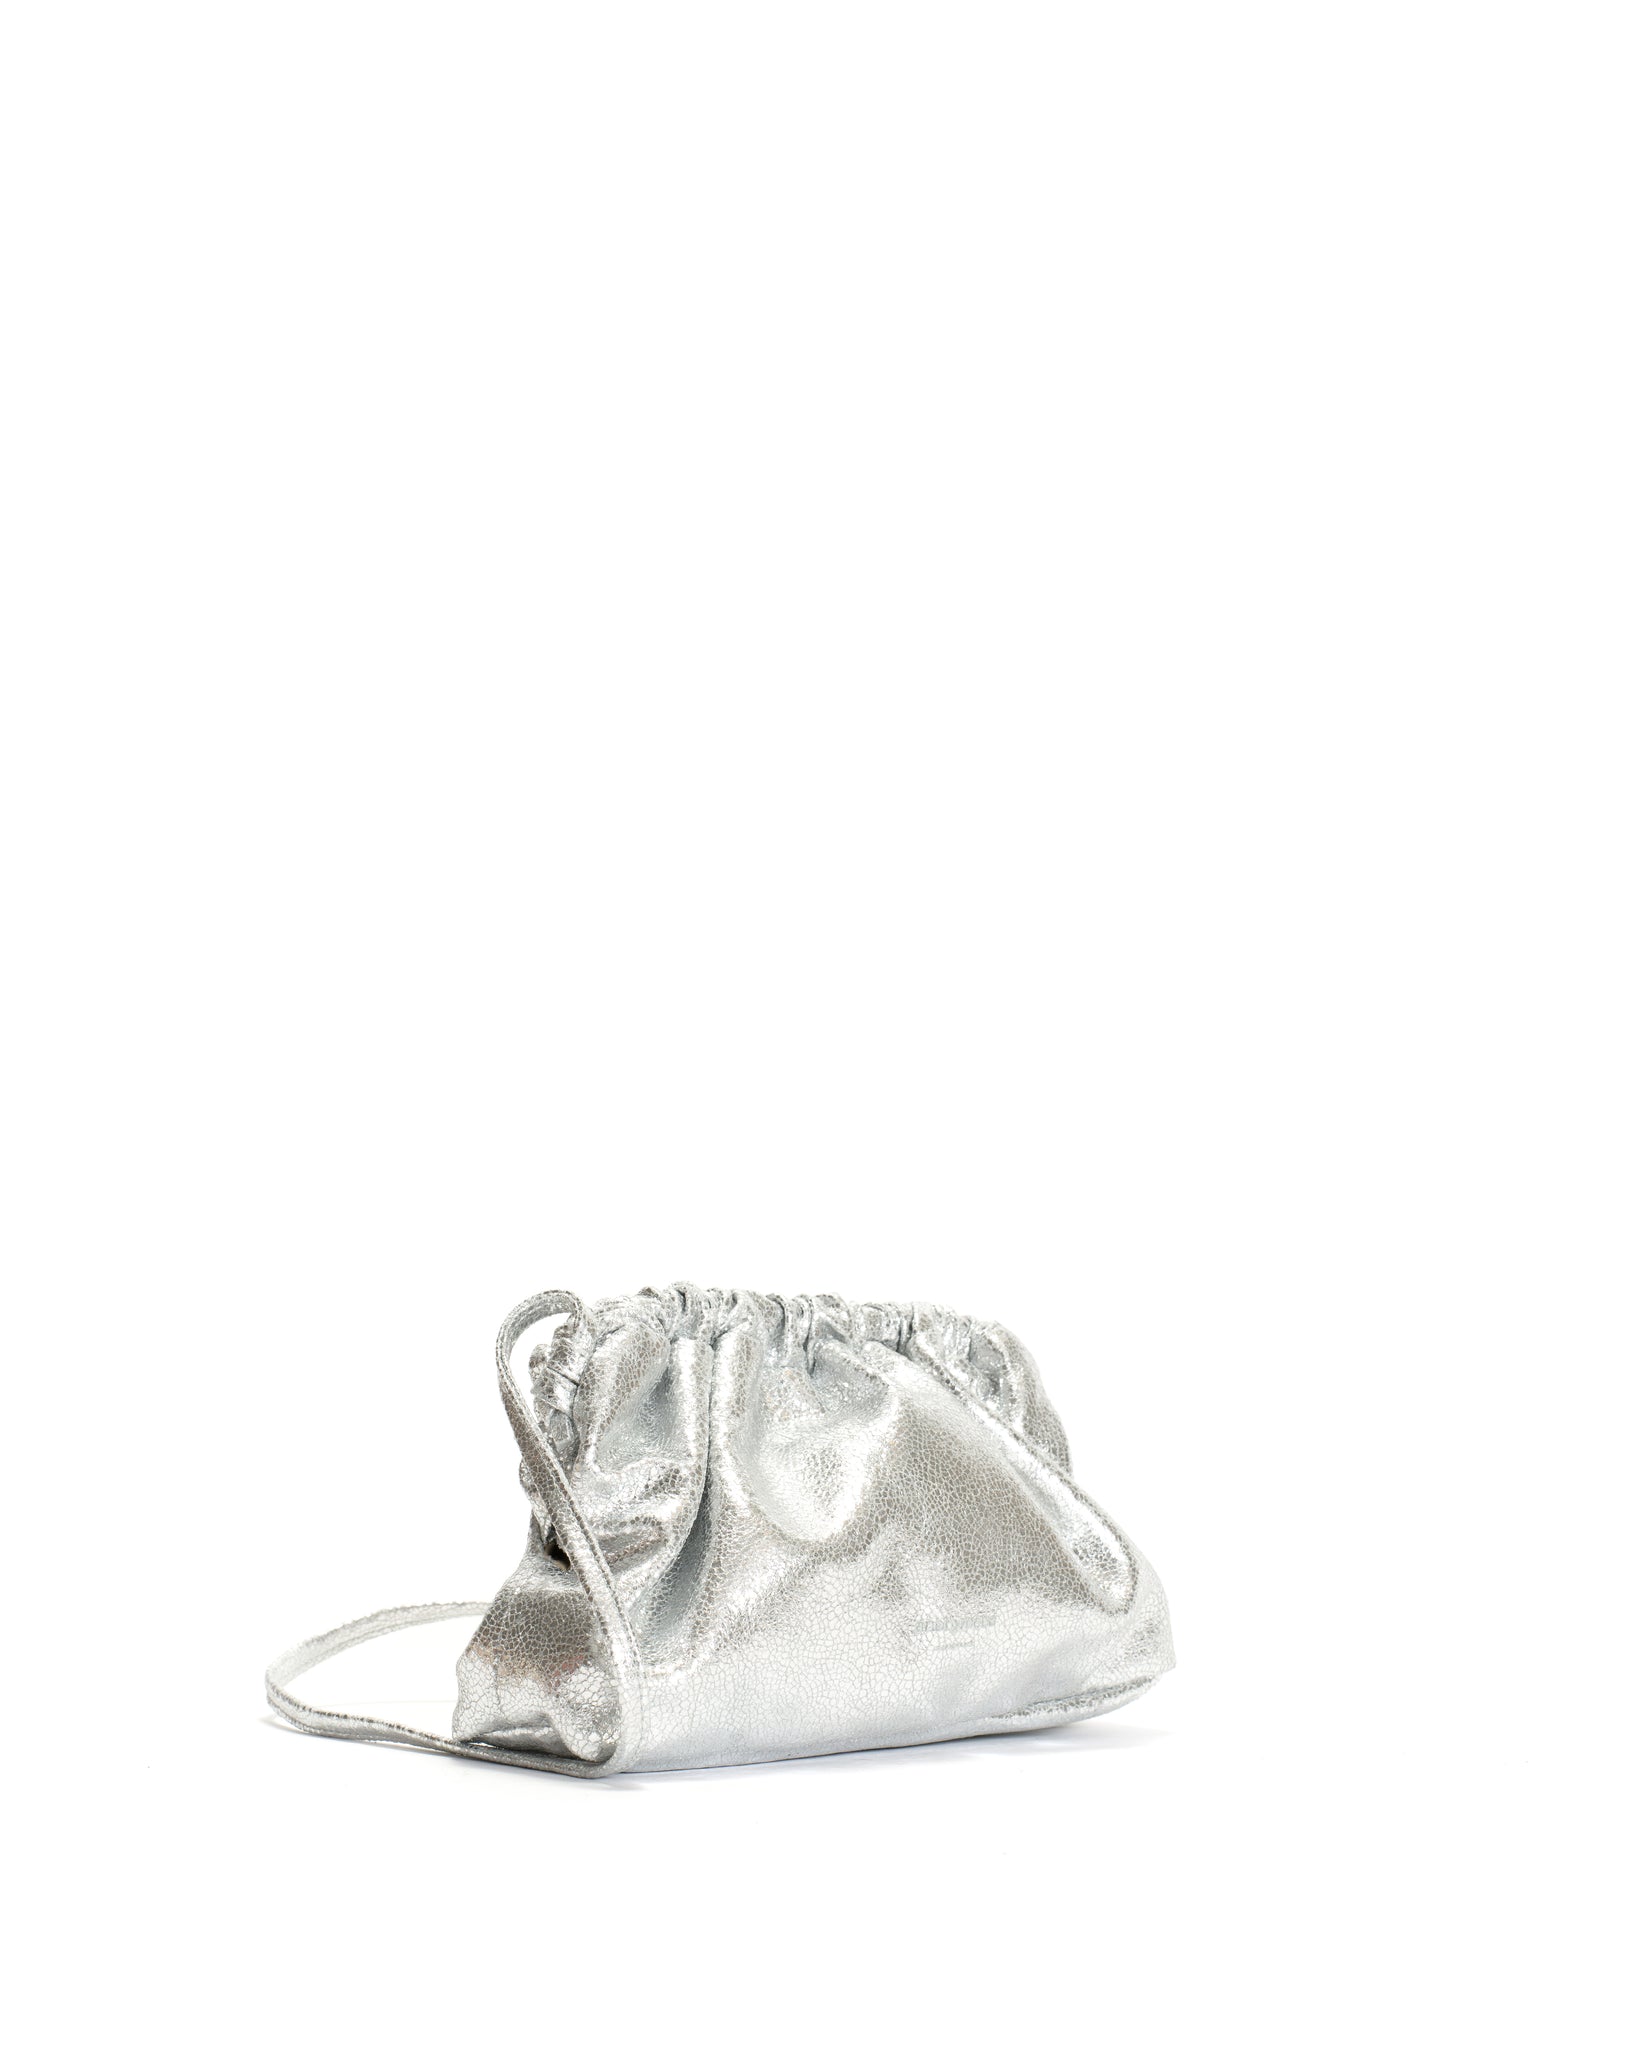 Hally petite cloud bag Crackled metallic goat Silver - Anonymous Copenhagen